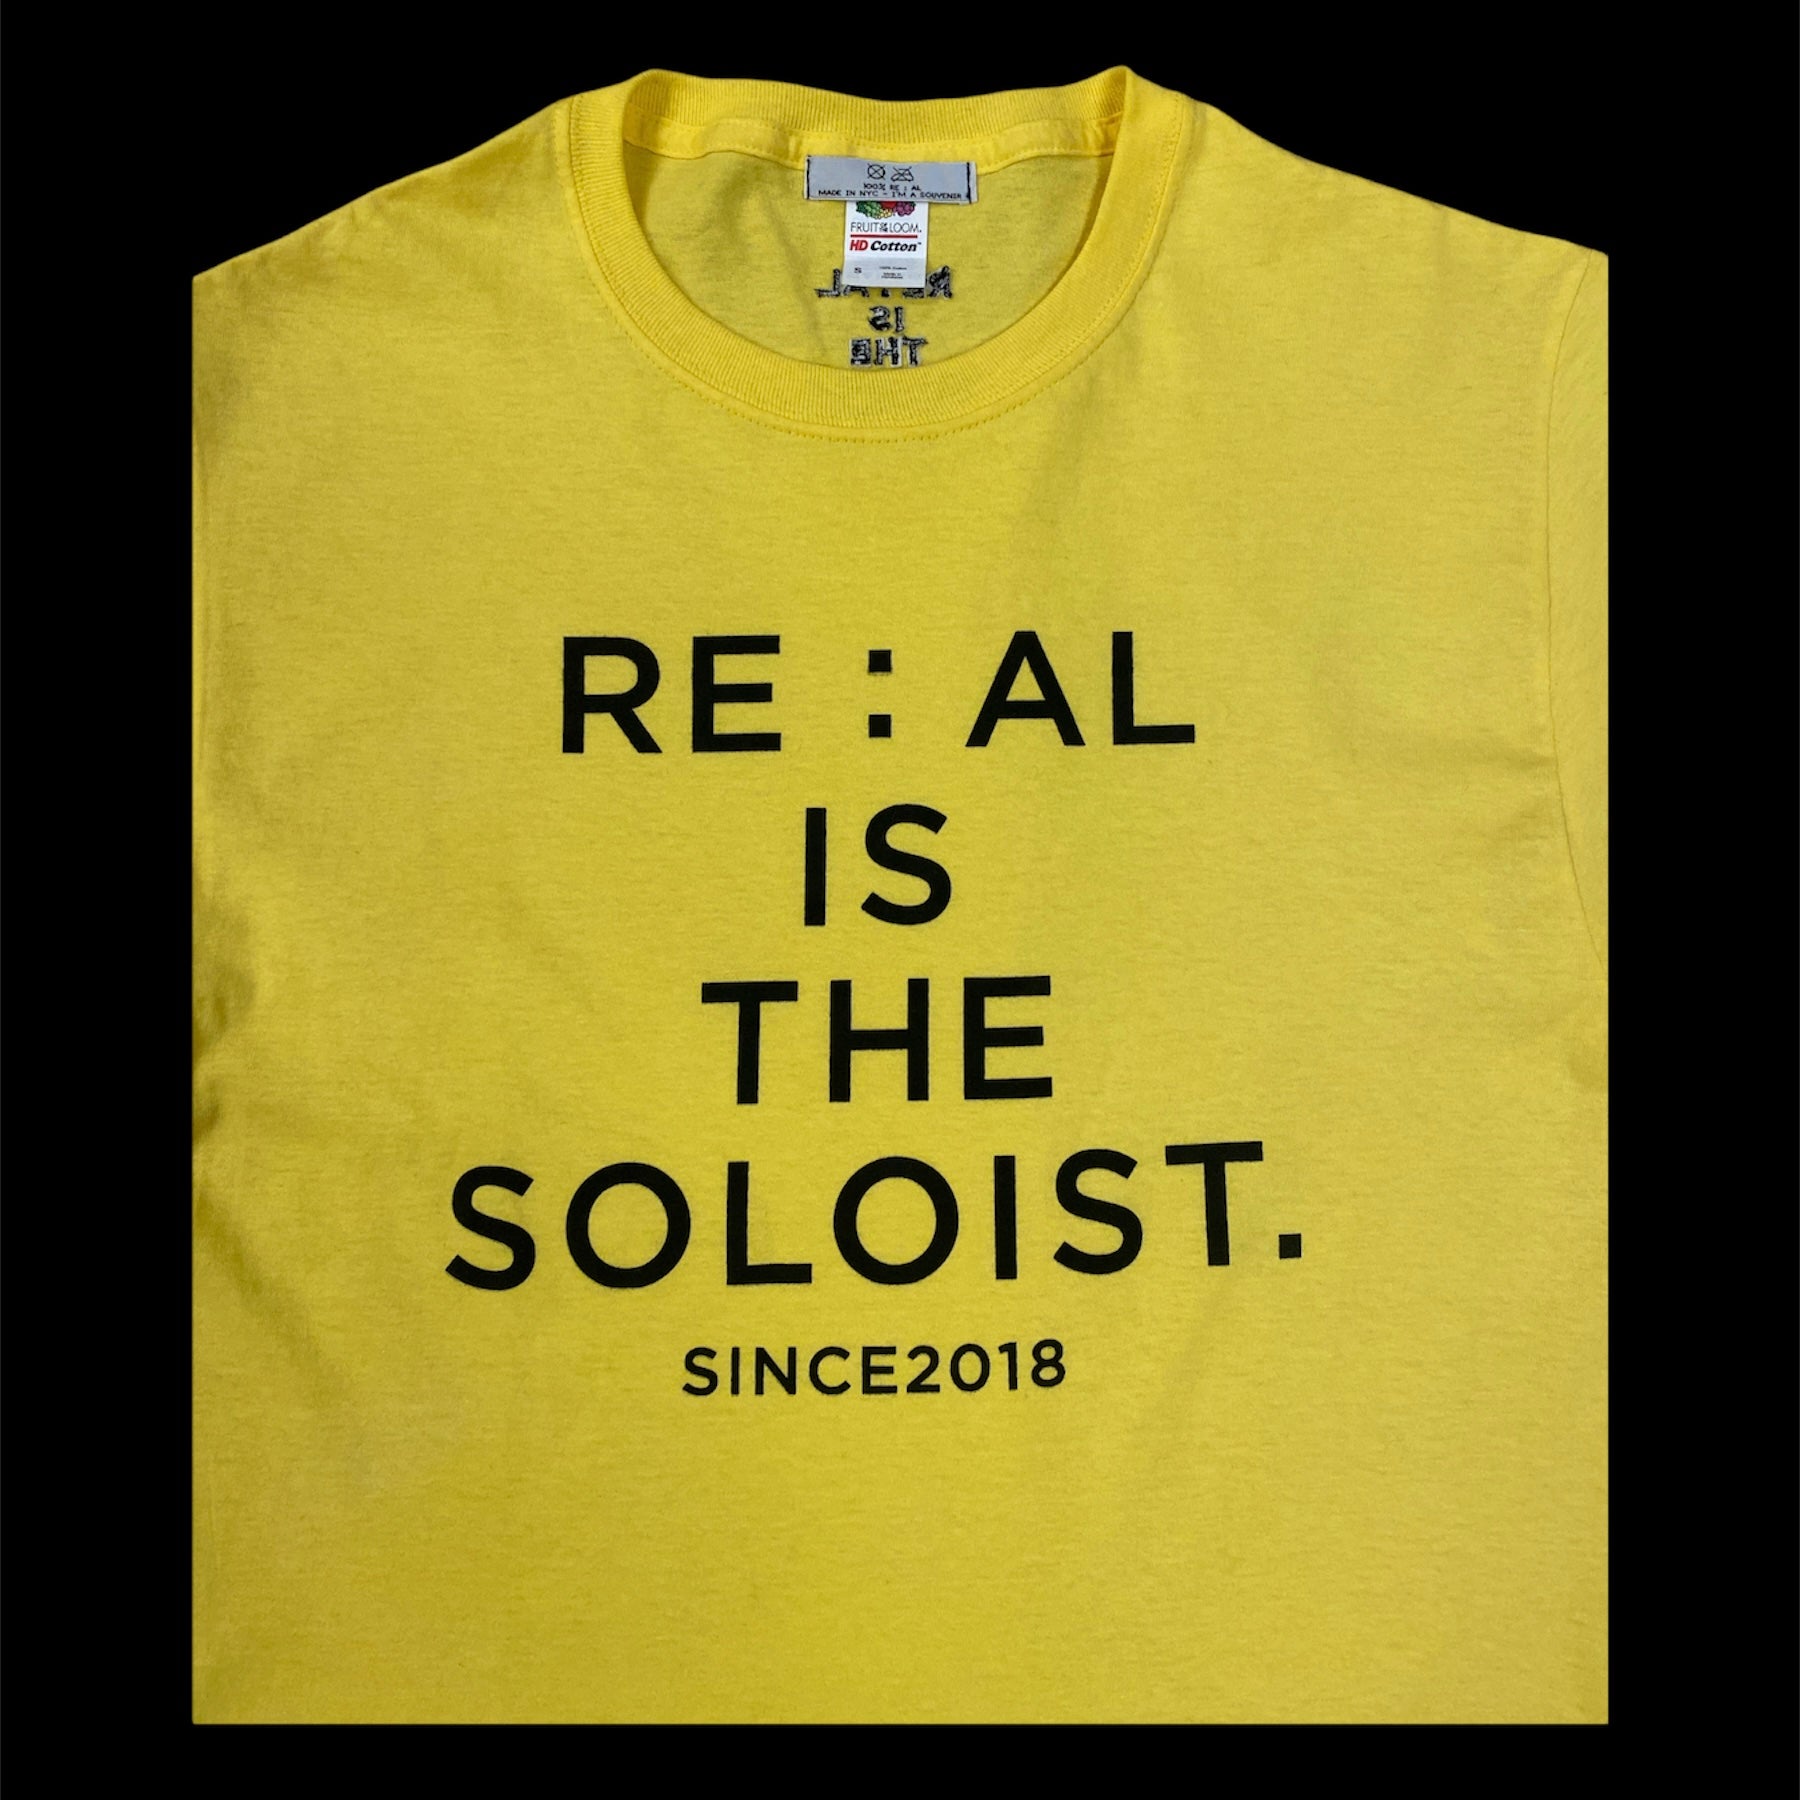 RE:AL IS THE SOLOIST "100% RE:AL" I'M A SOUVENIR T-SHIRT